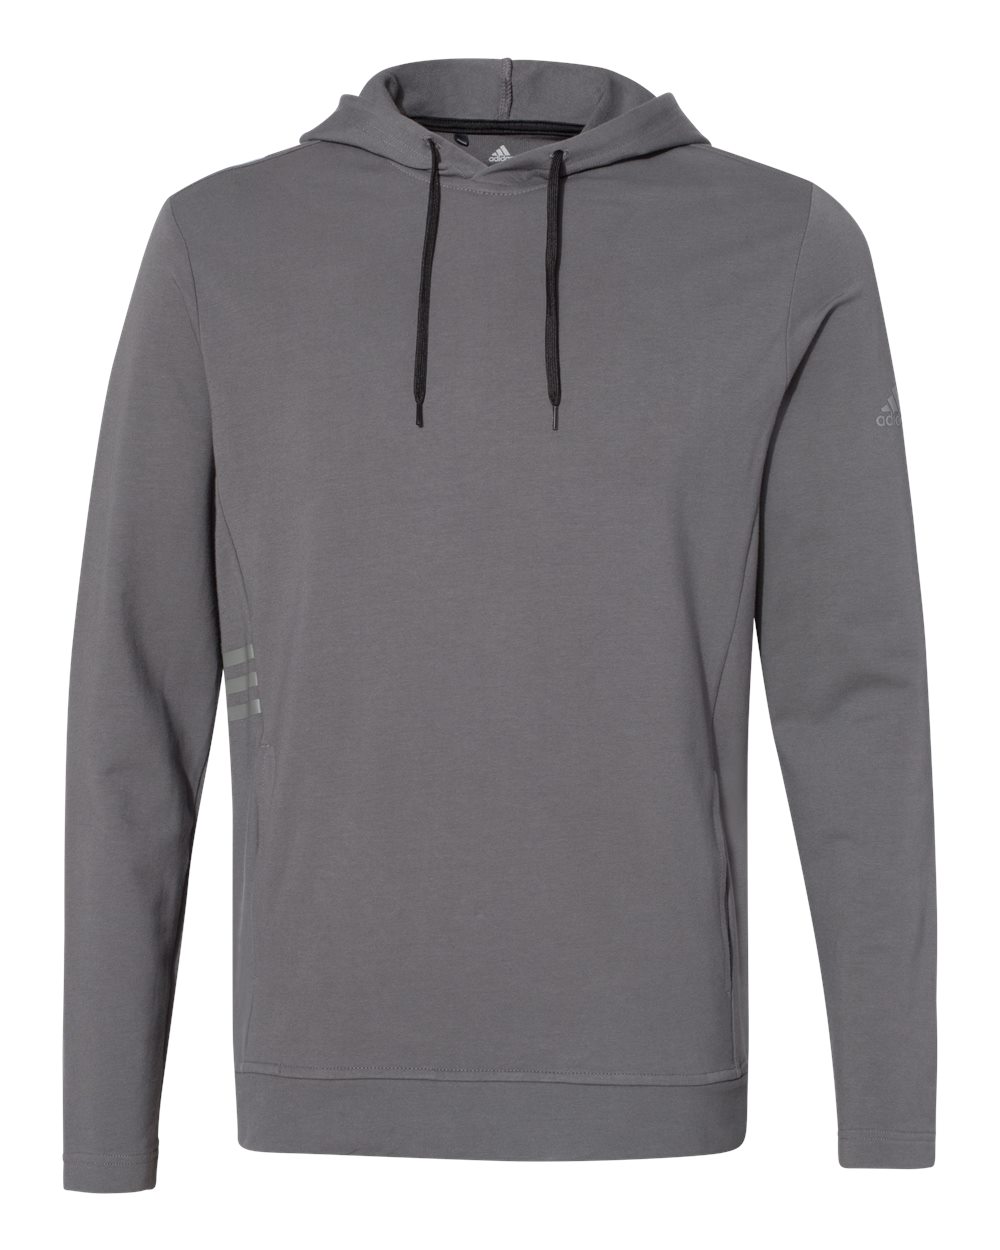 Adidas A450 - Lightweight Hooded Sweatshirt $42.43 - Sweatshirts